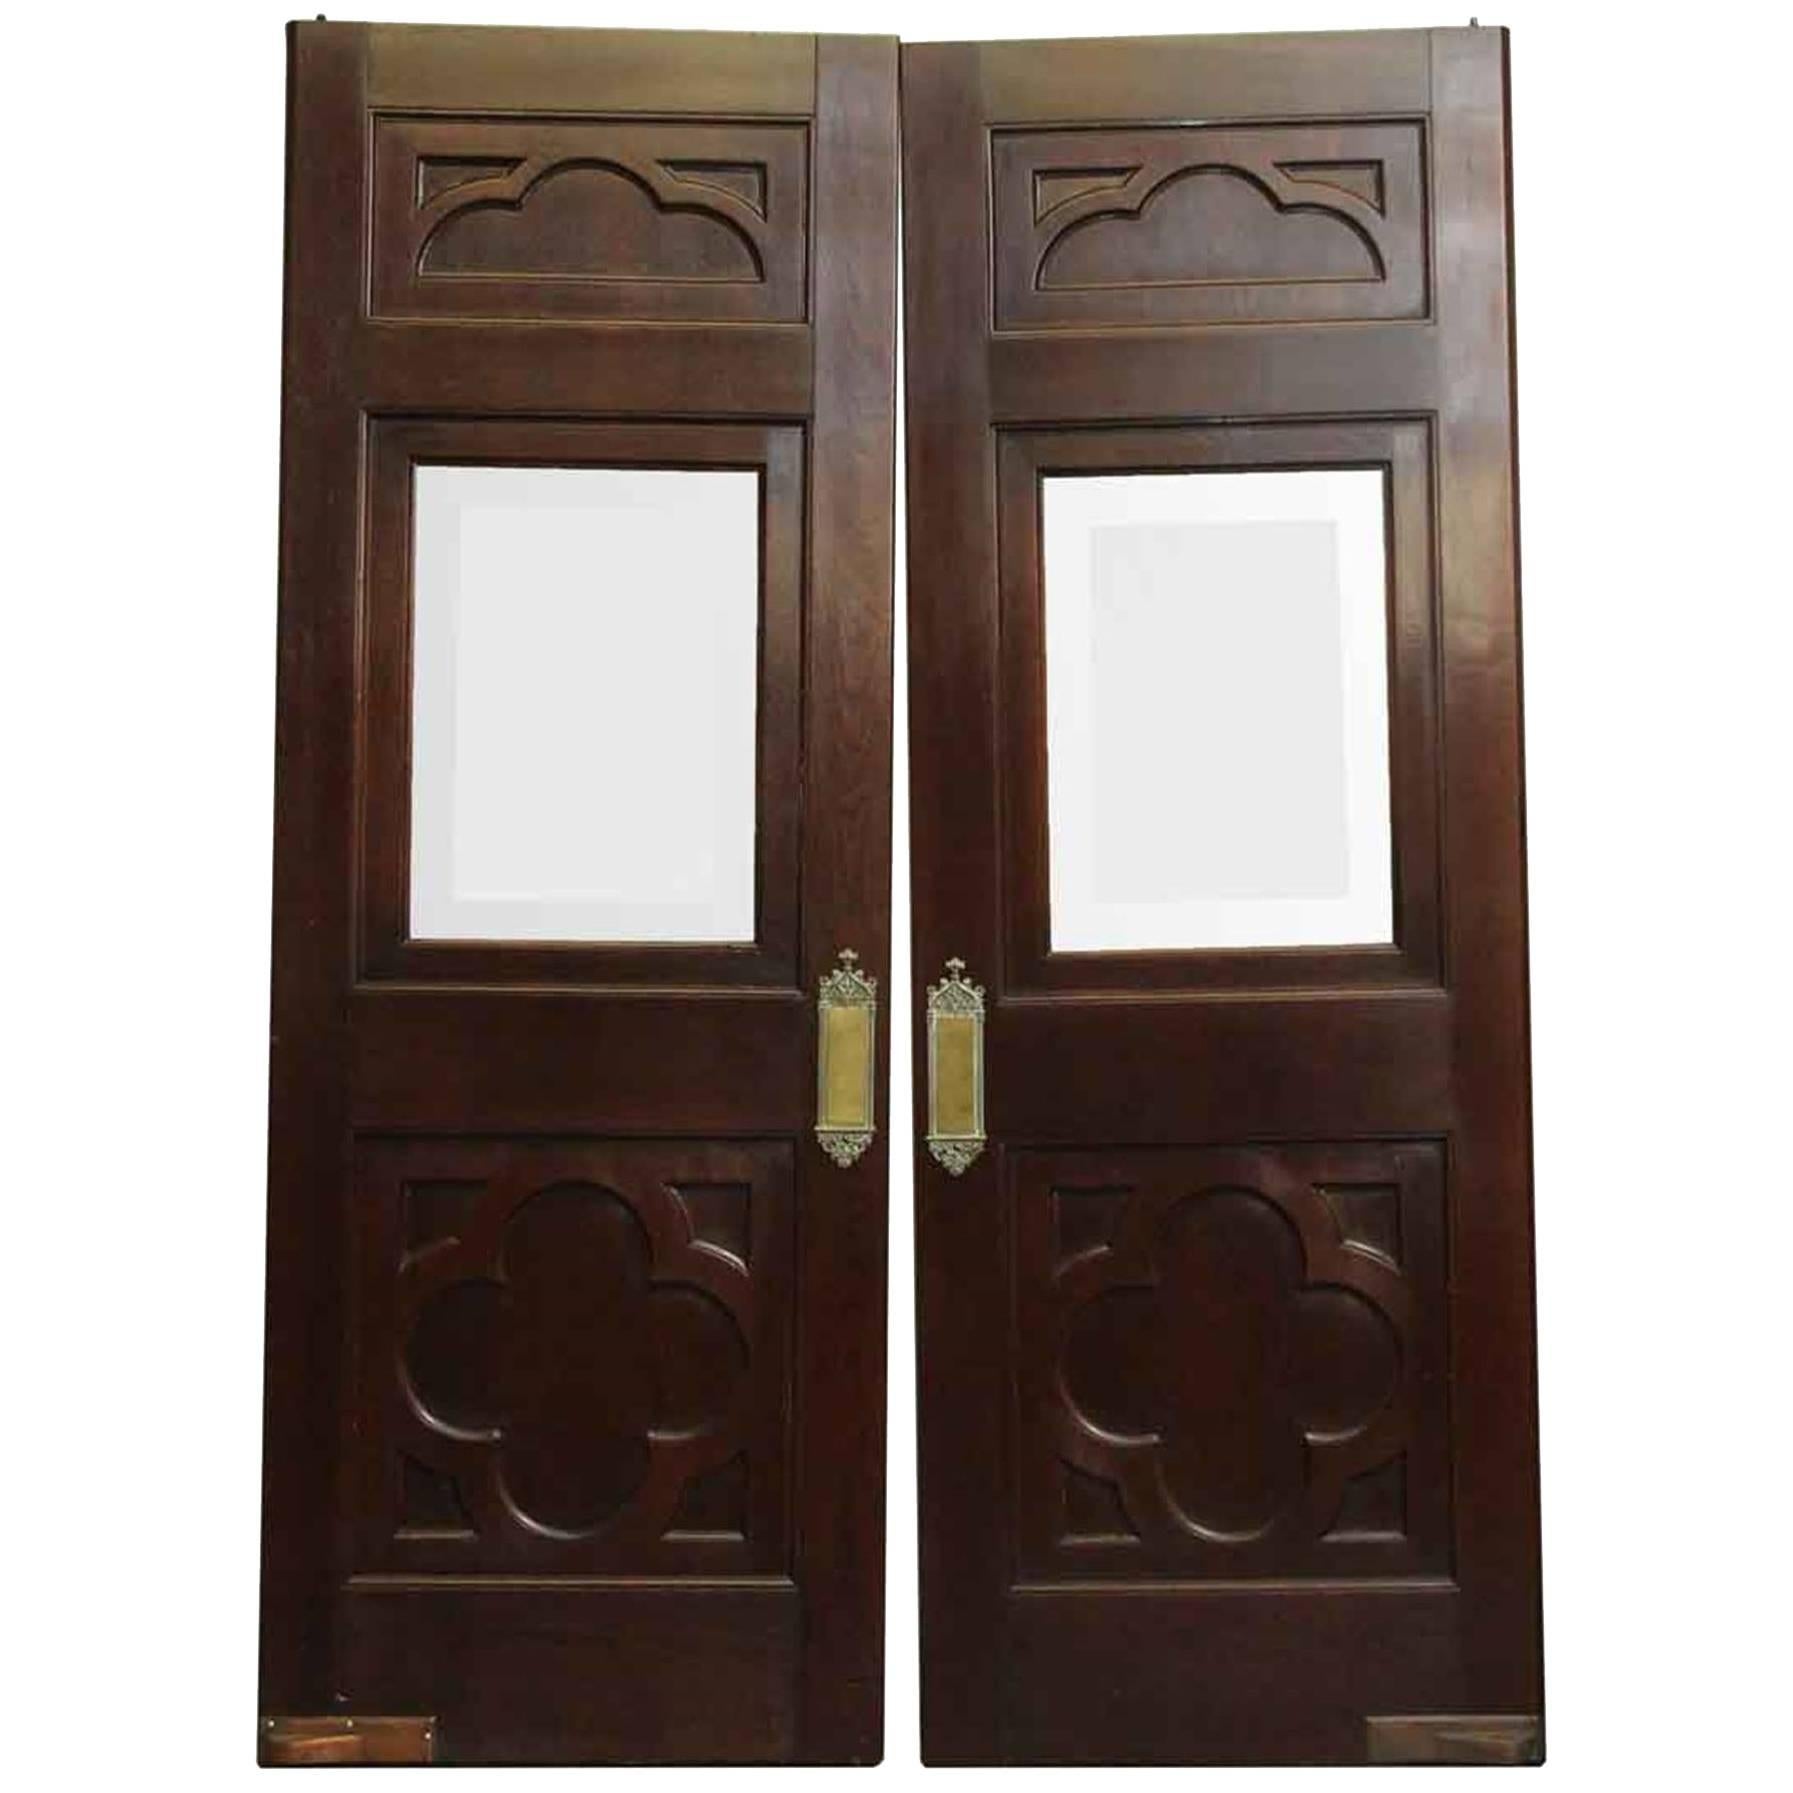 1910s Clover Burled Walnut and Beveled Glass Doors, Original Ornate Push Plates